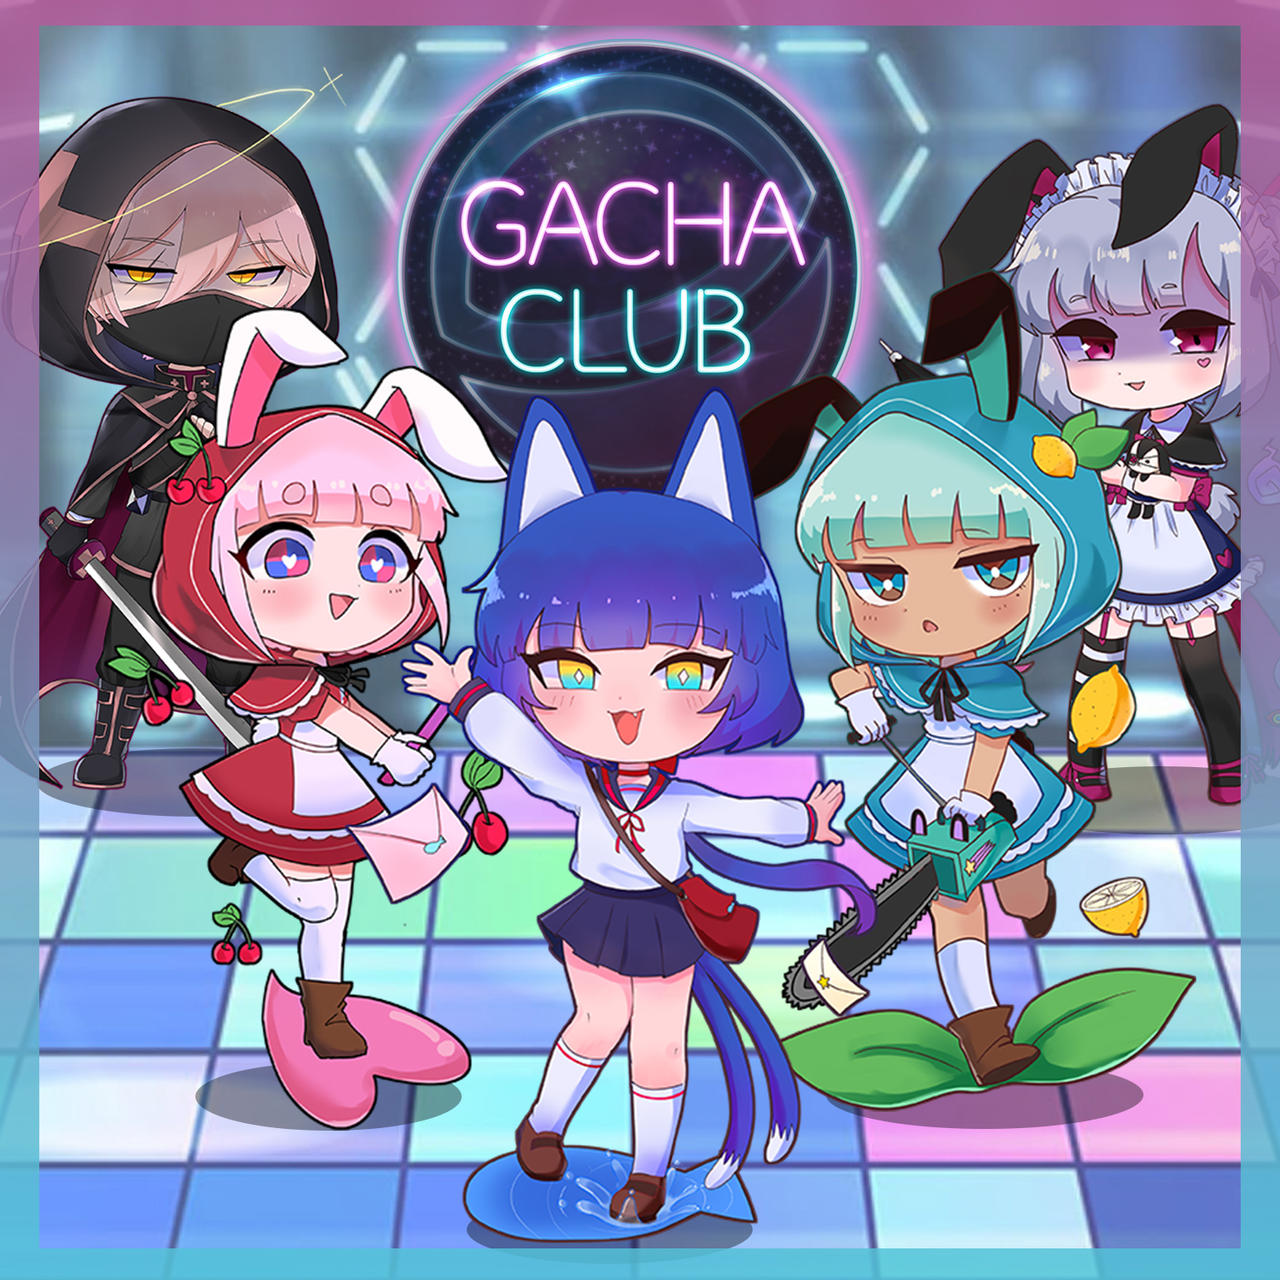 Gacha Club is the latest offline Gacha game by Lunime!